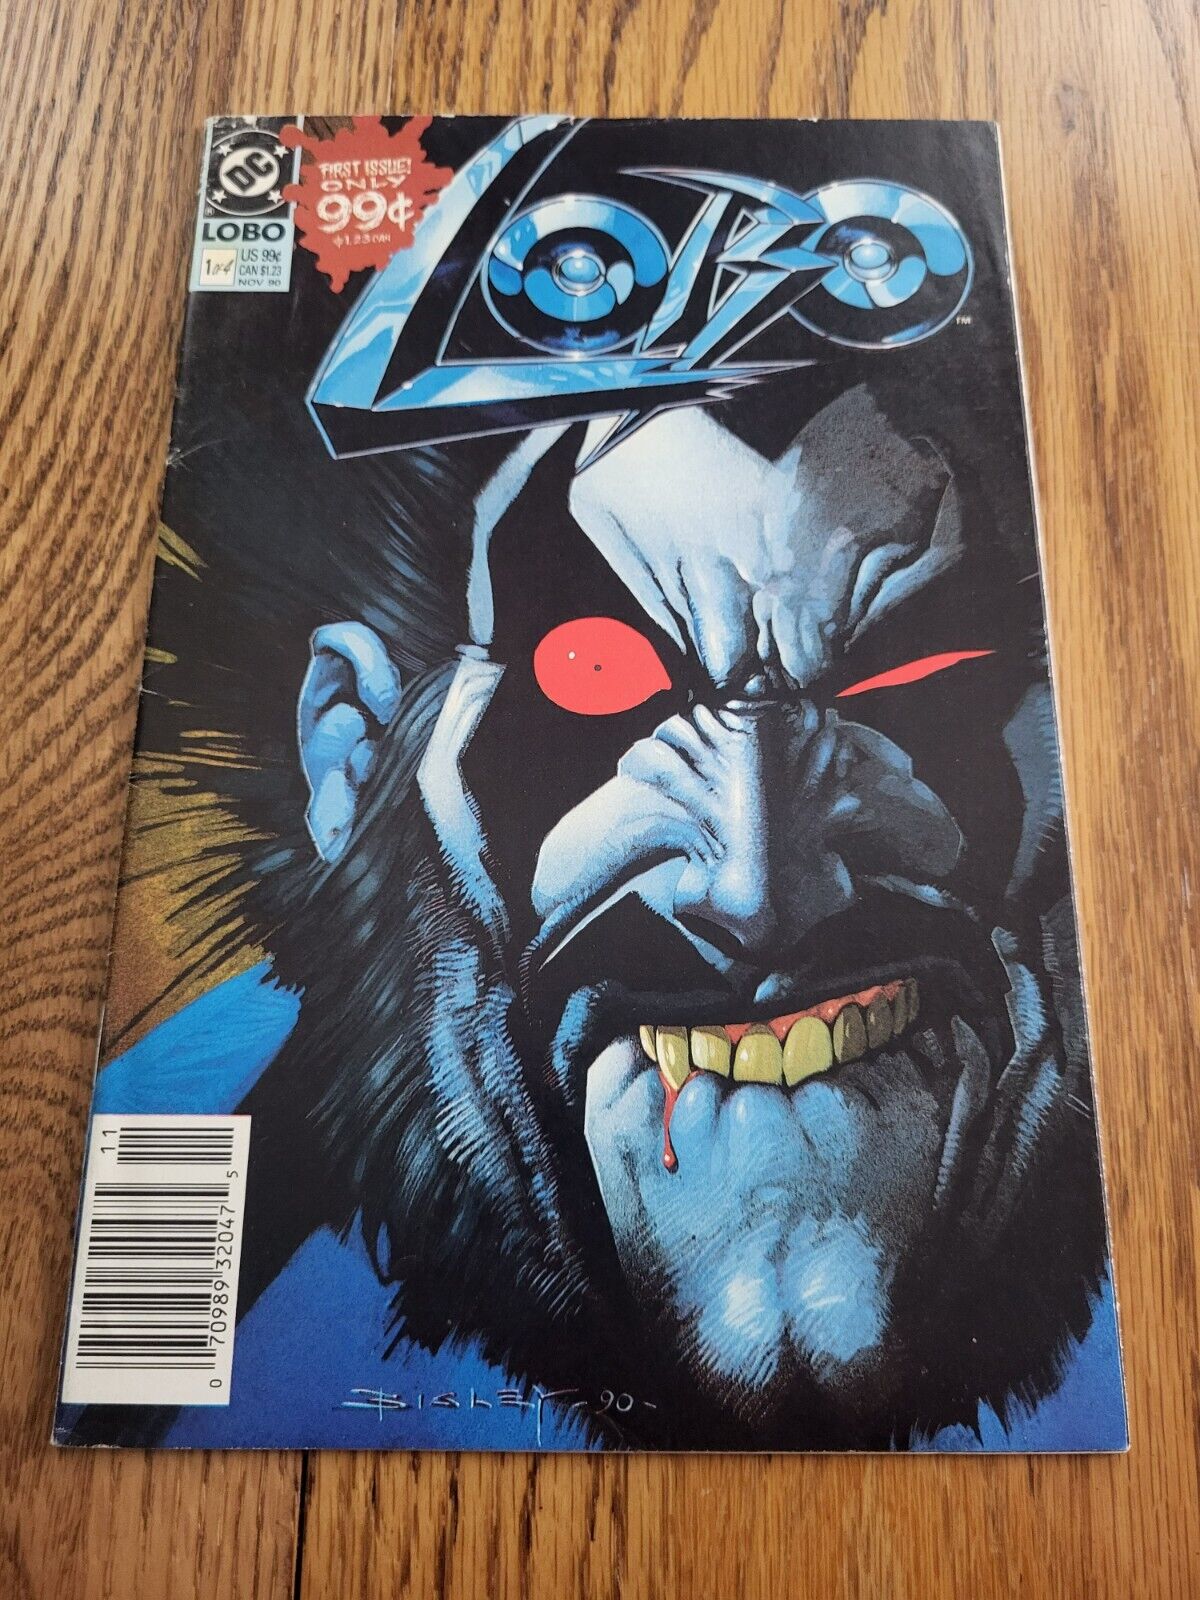 DC Comics Lobo #1 - Volume 1 (1990) - Very Good